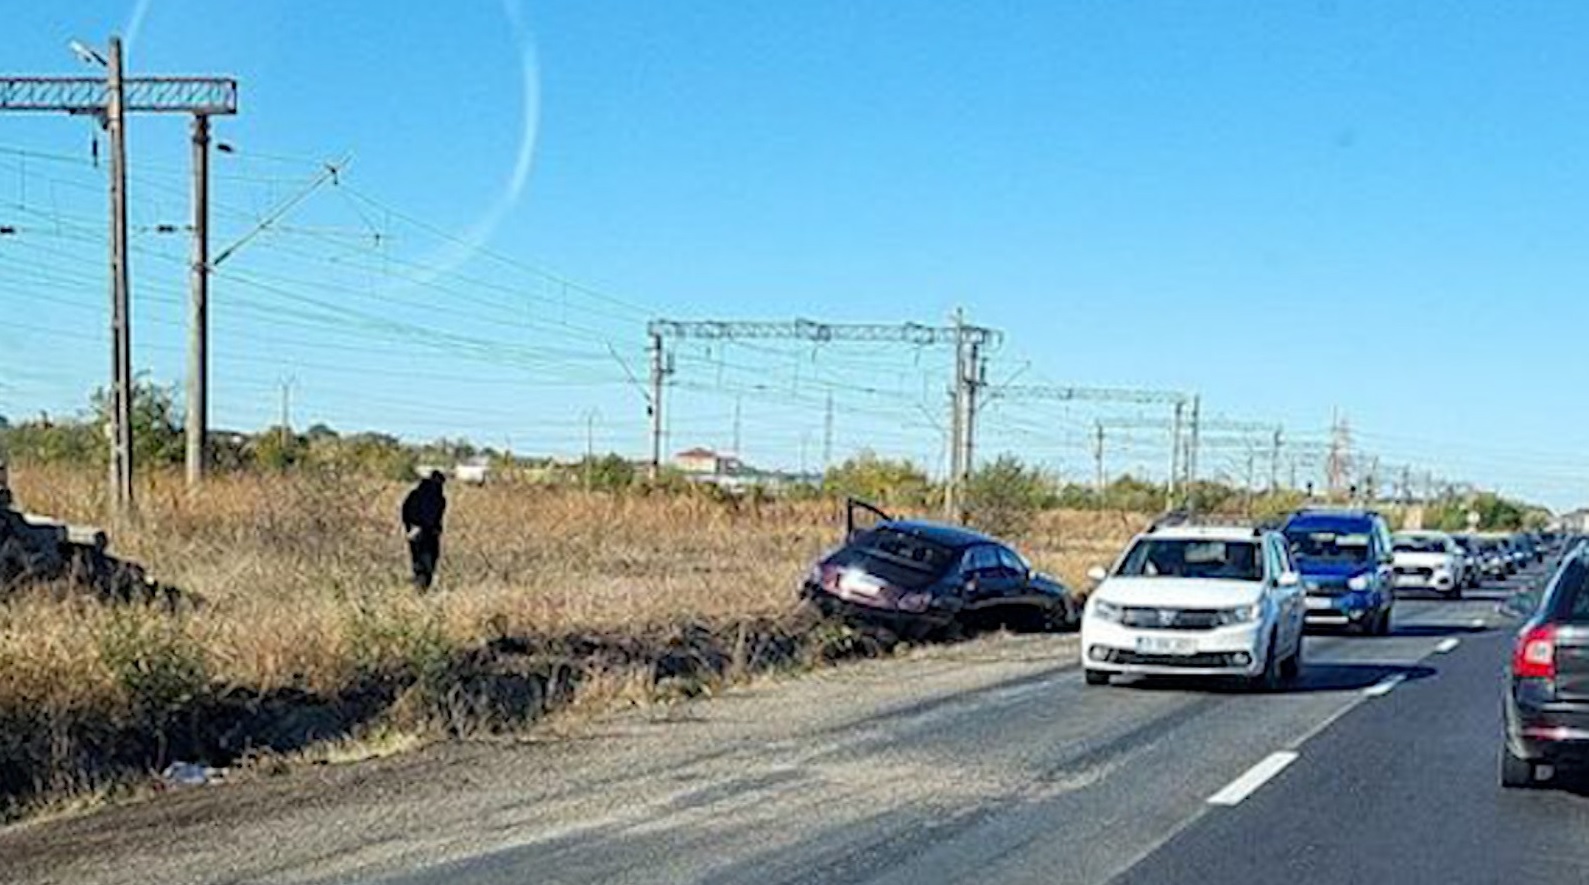 Maşina lui Gigi Becali, după accident / Foto: observatornews.ro